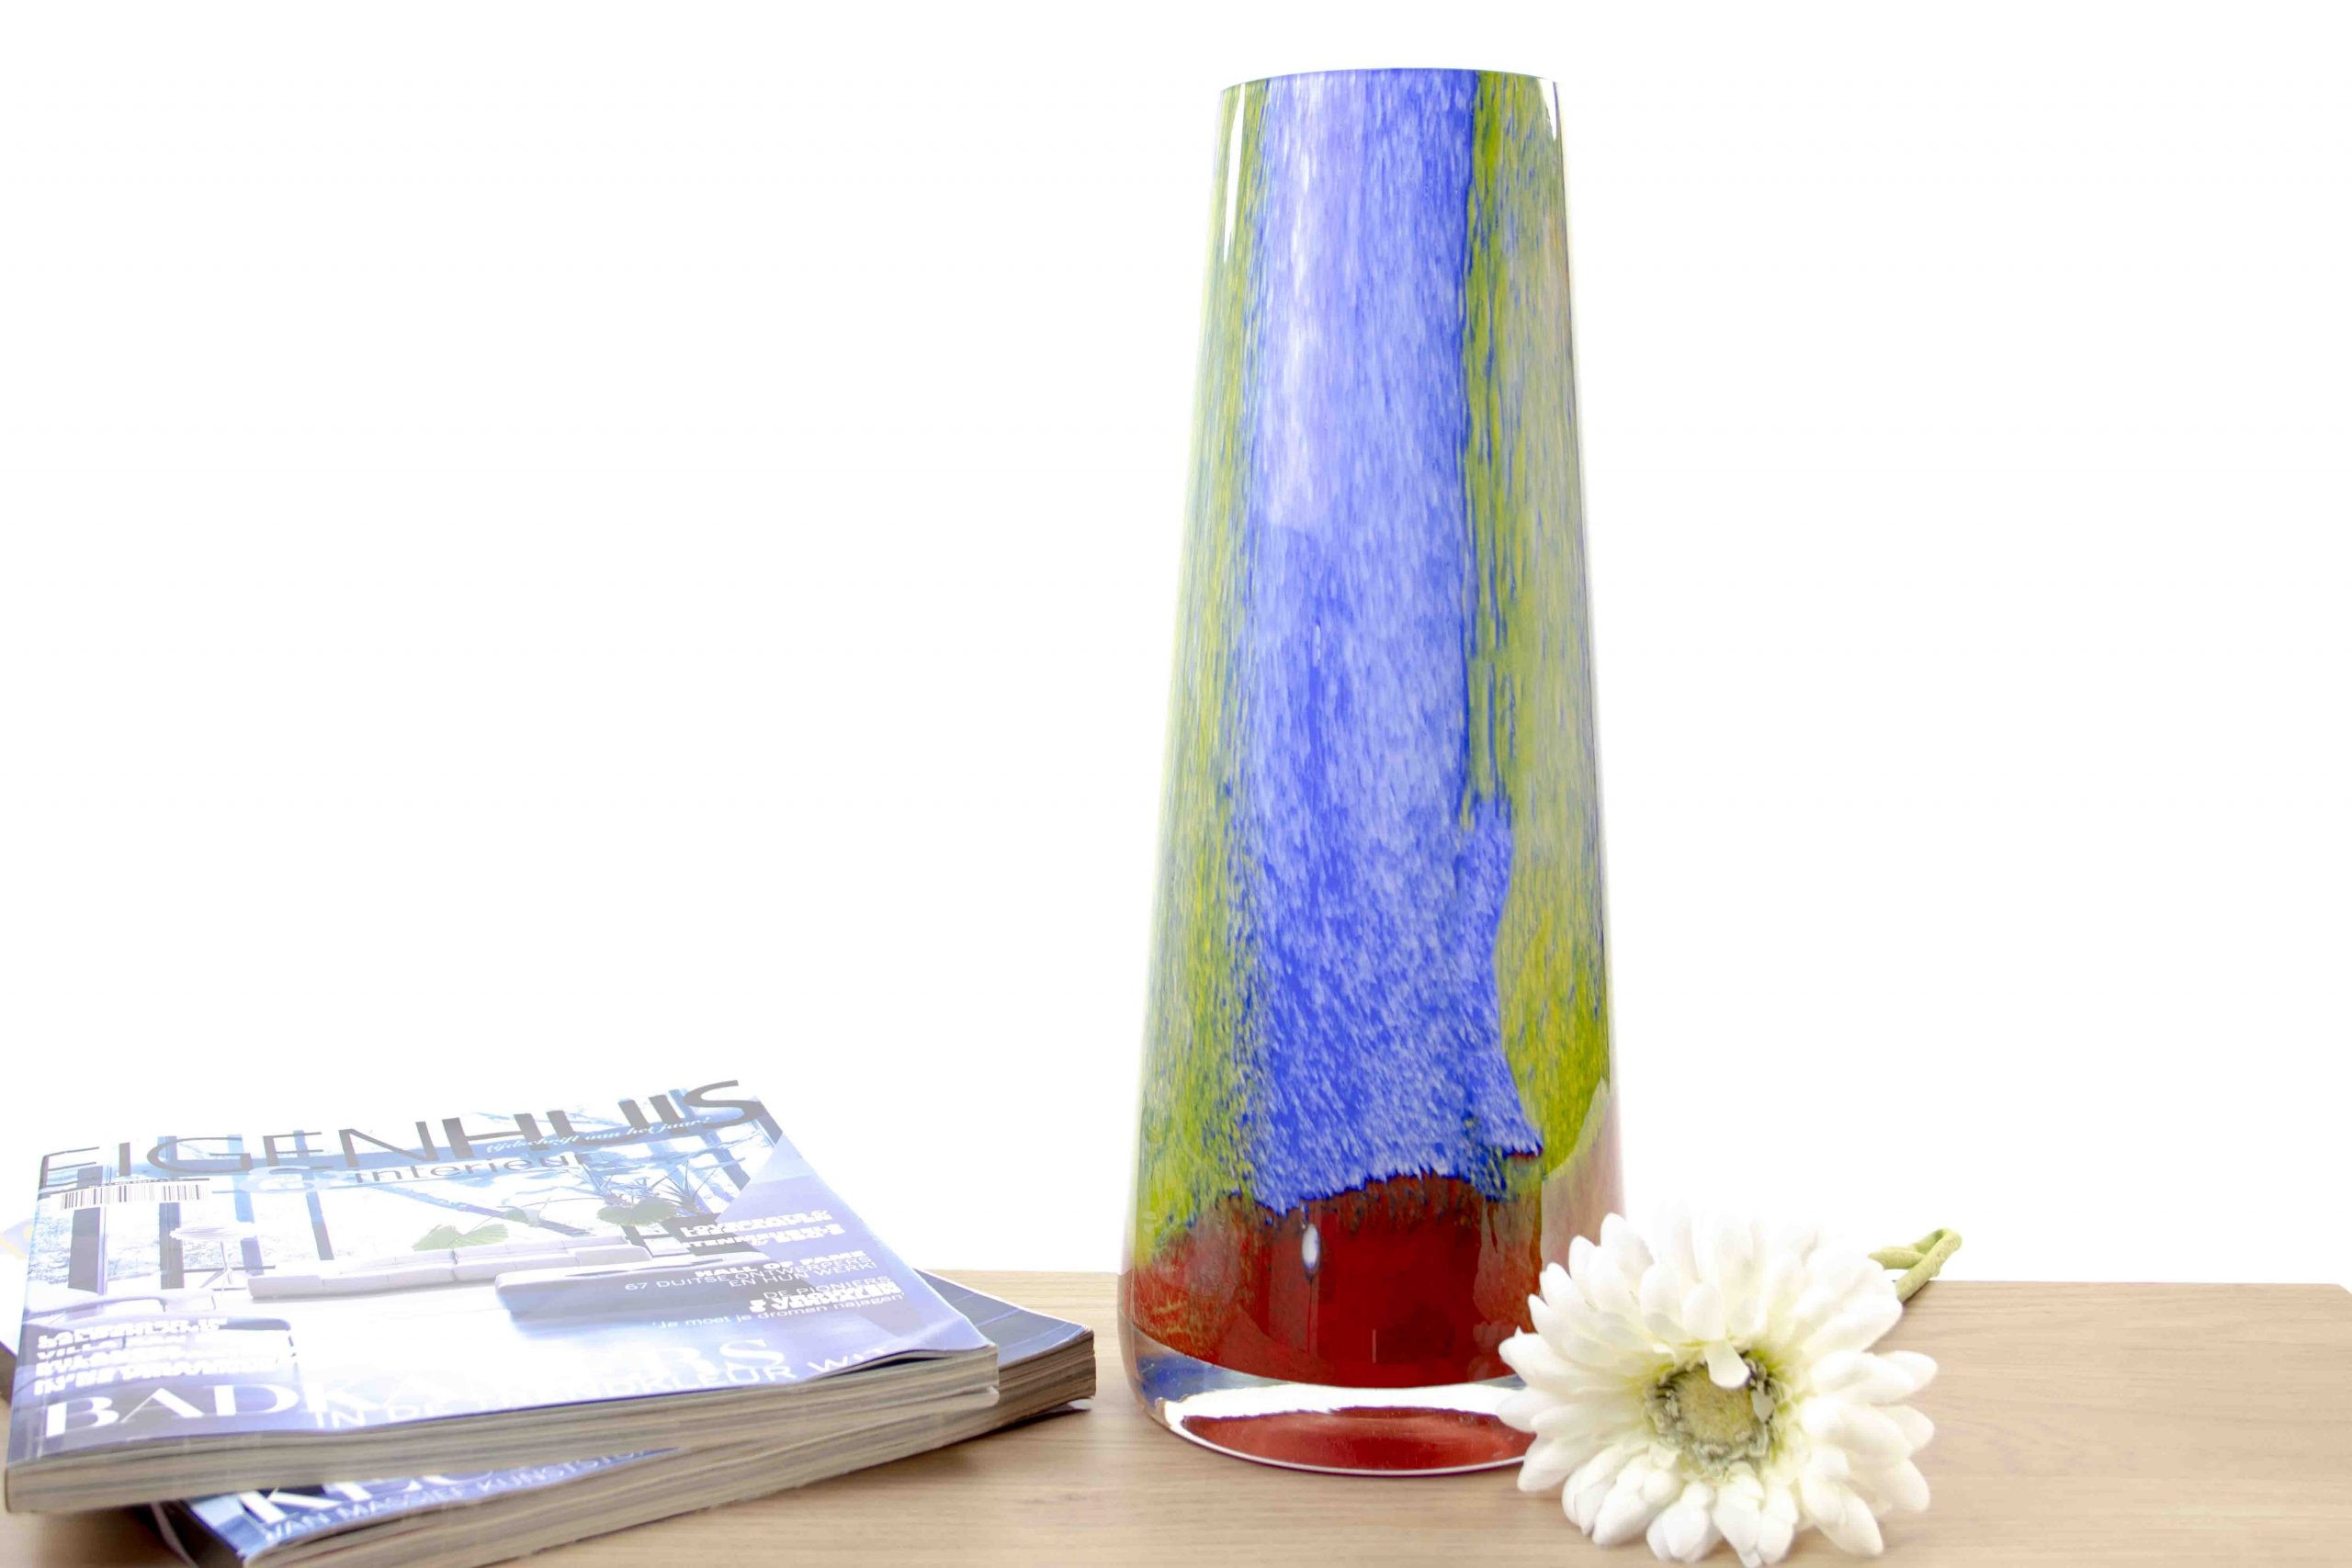 Glazen Marine Loranto - 35 cm, blauw, groen, rood - City of Glass